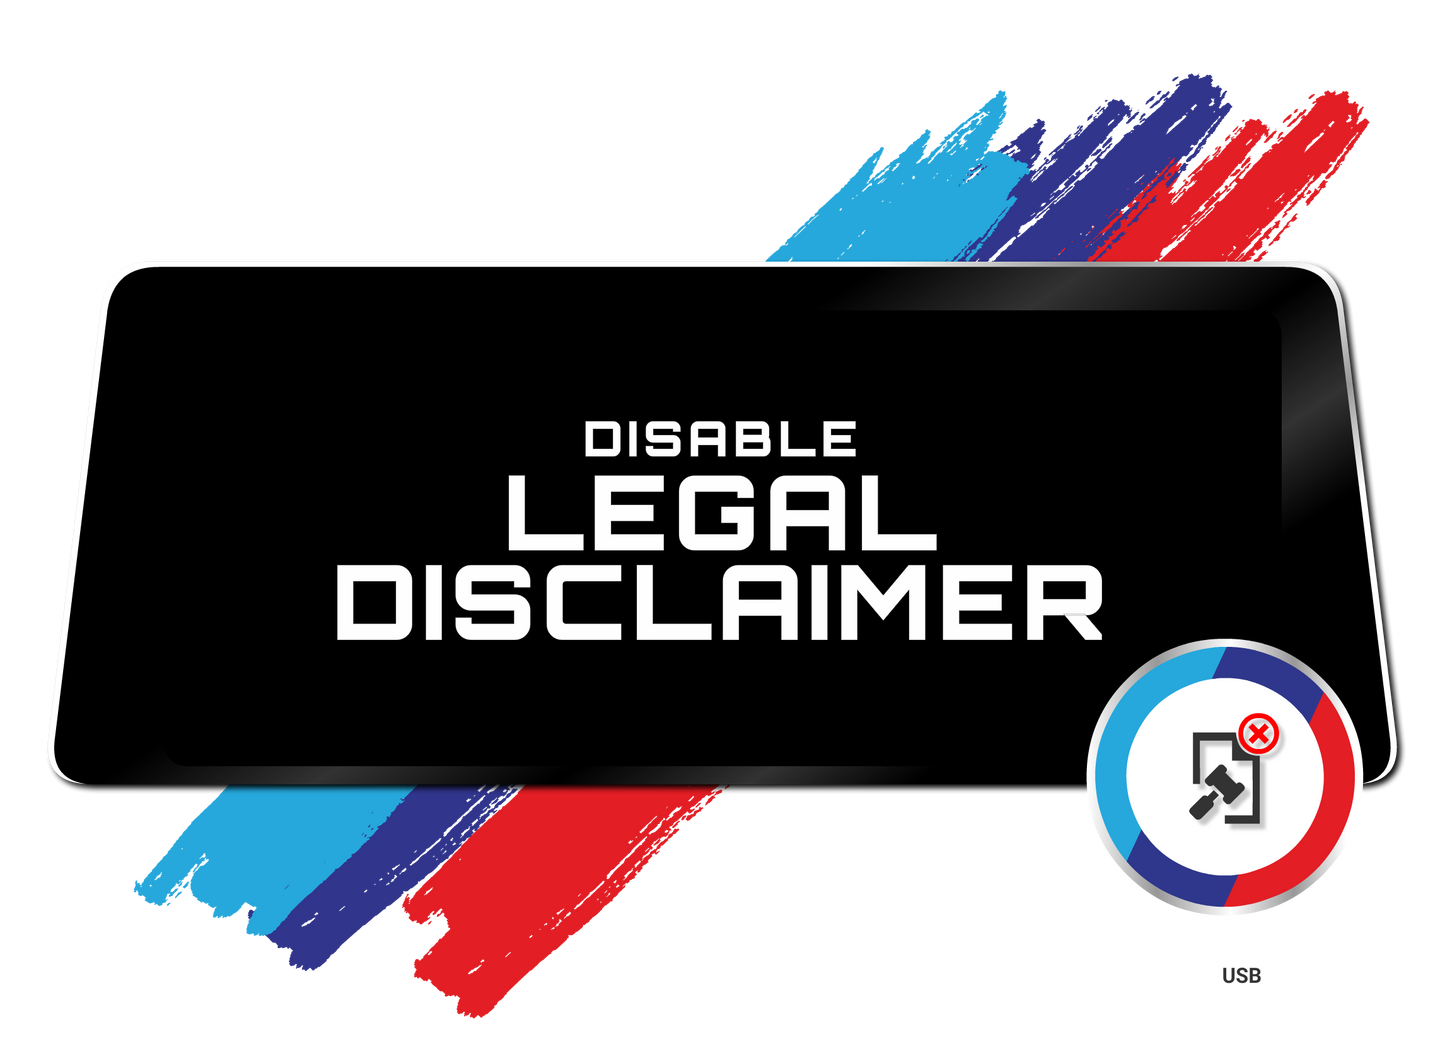 nbt idrive disable legal disclaimer